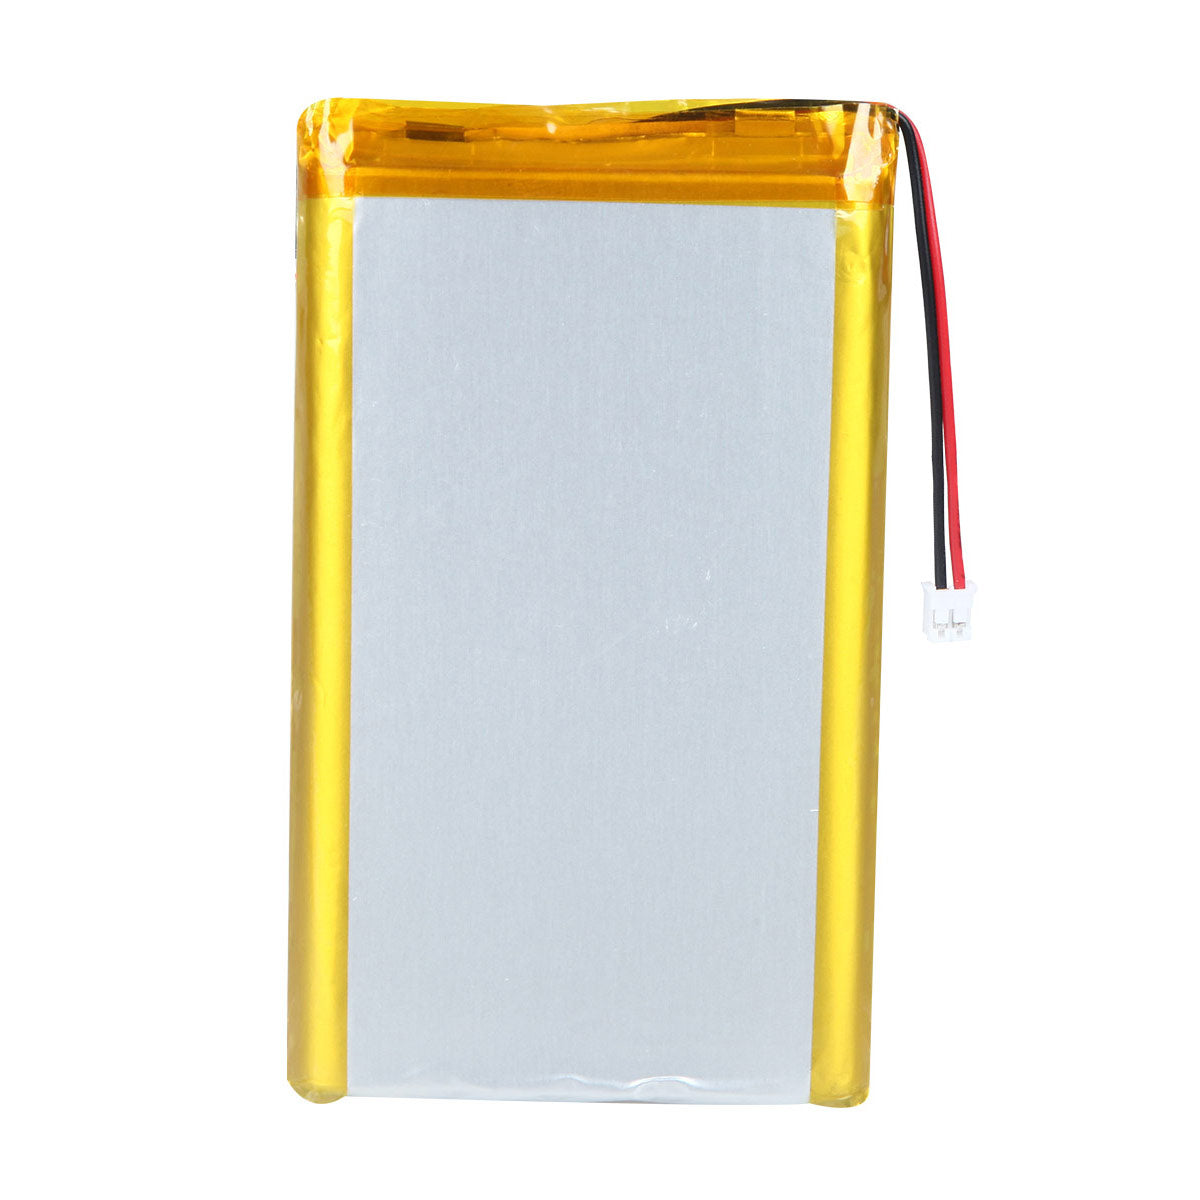 YDL 1160100 3.7 v 10000mAh lithium ion battery